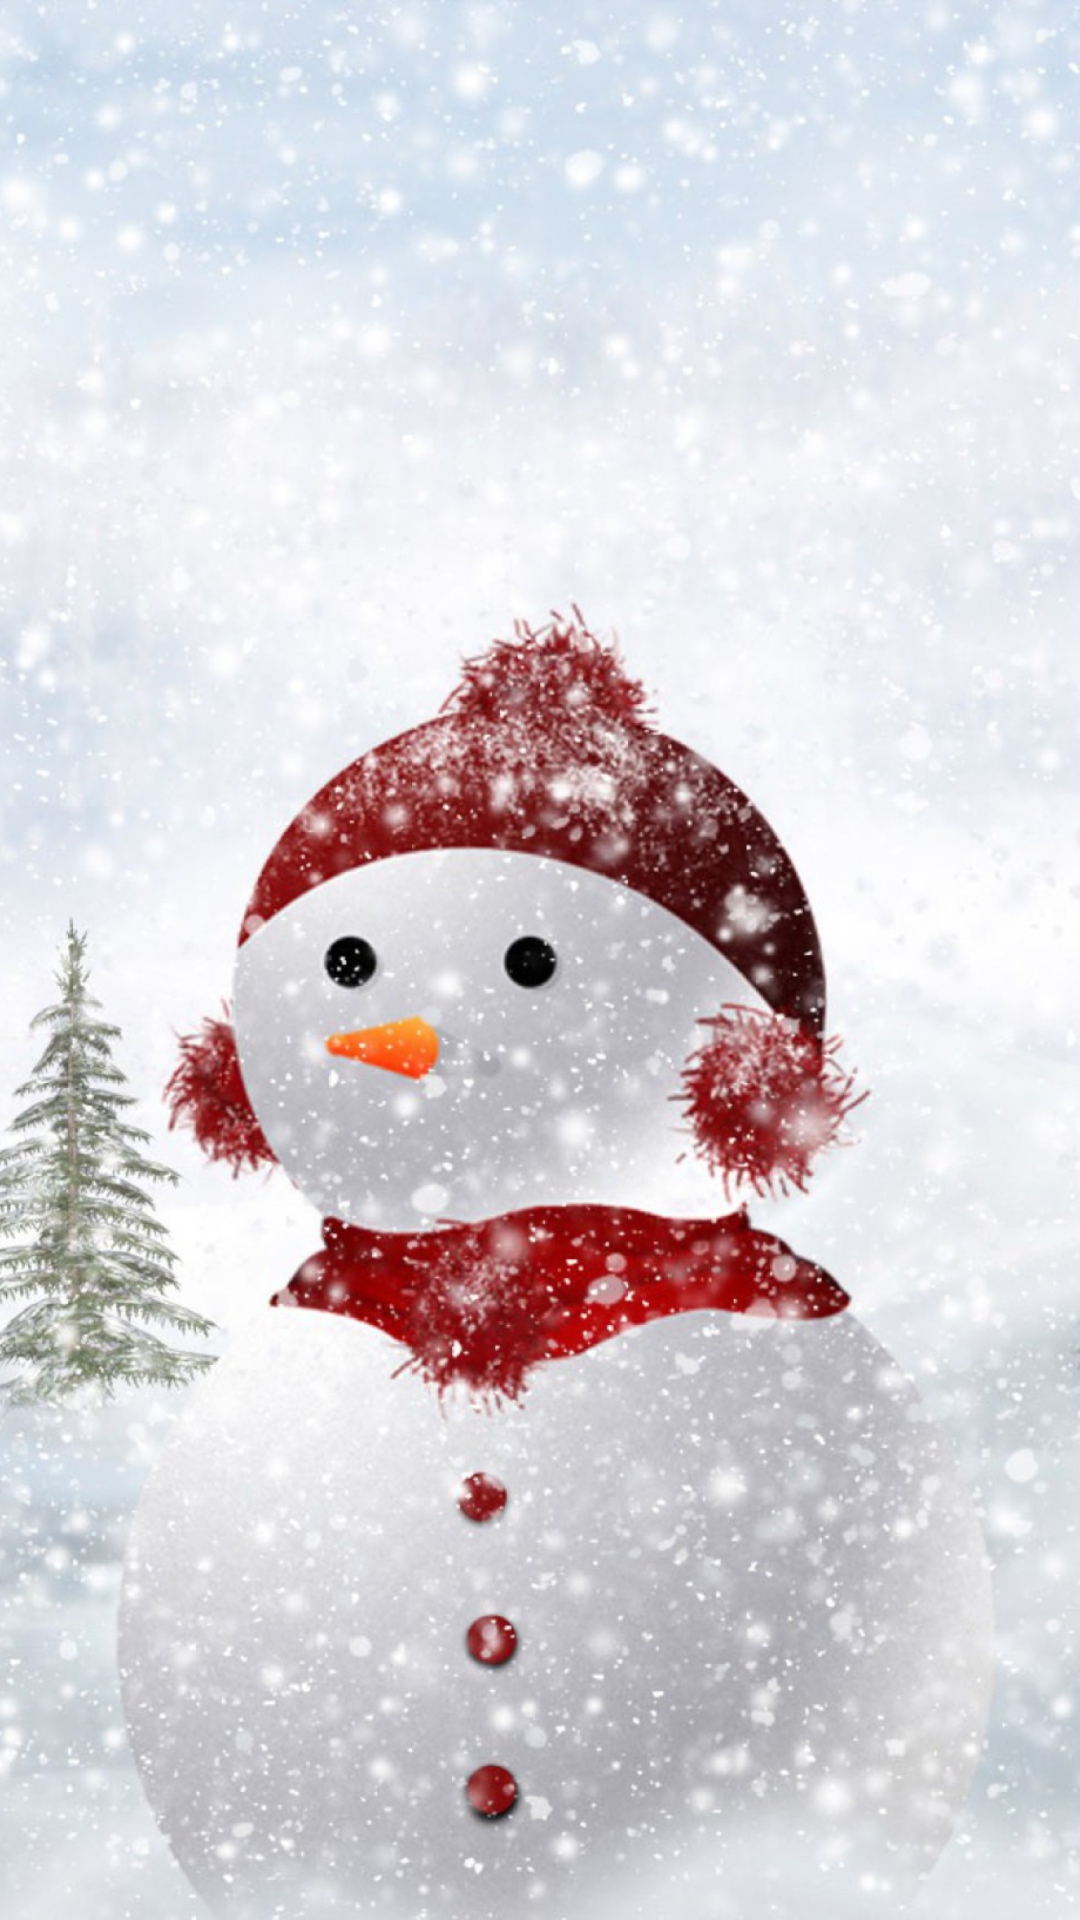 Snowman In Snow wallpaper 1080x1920